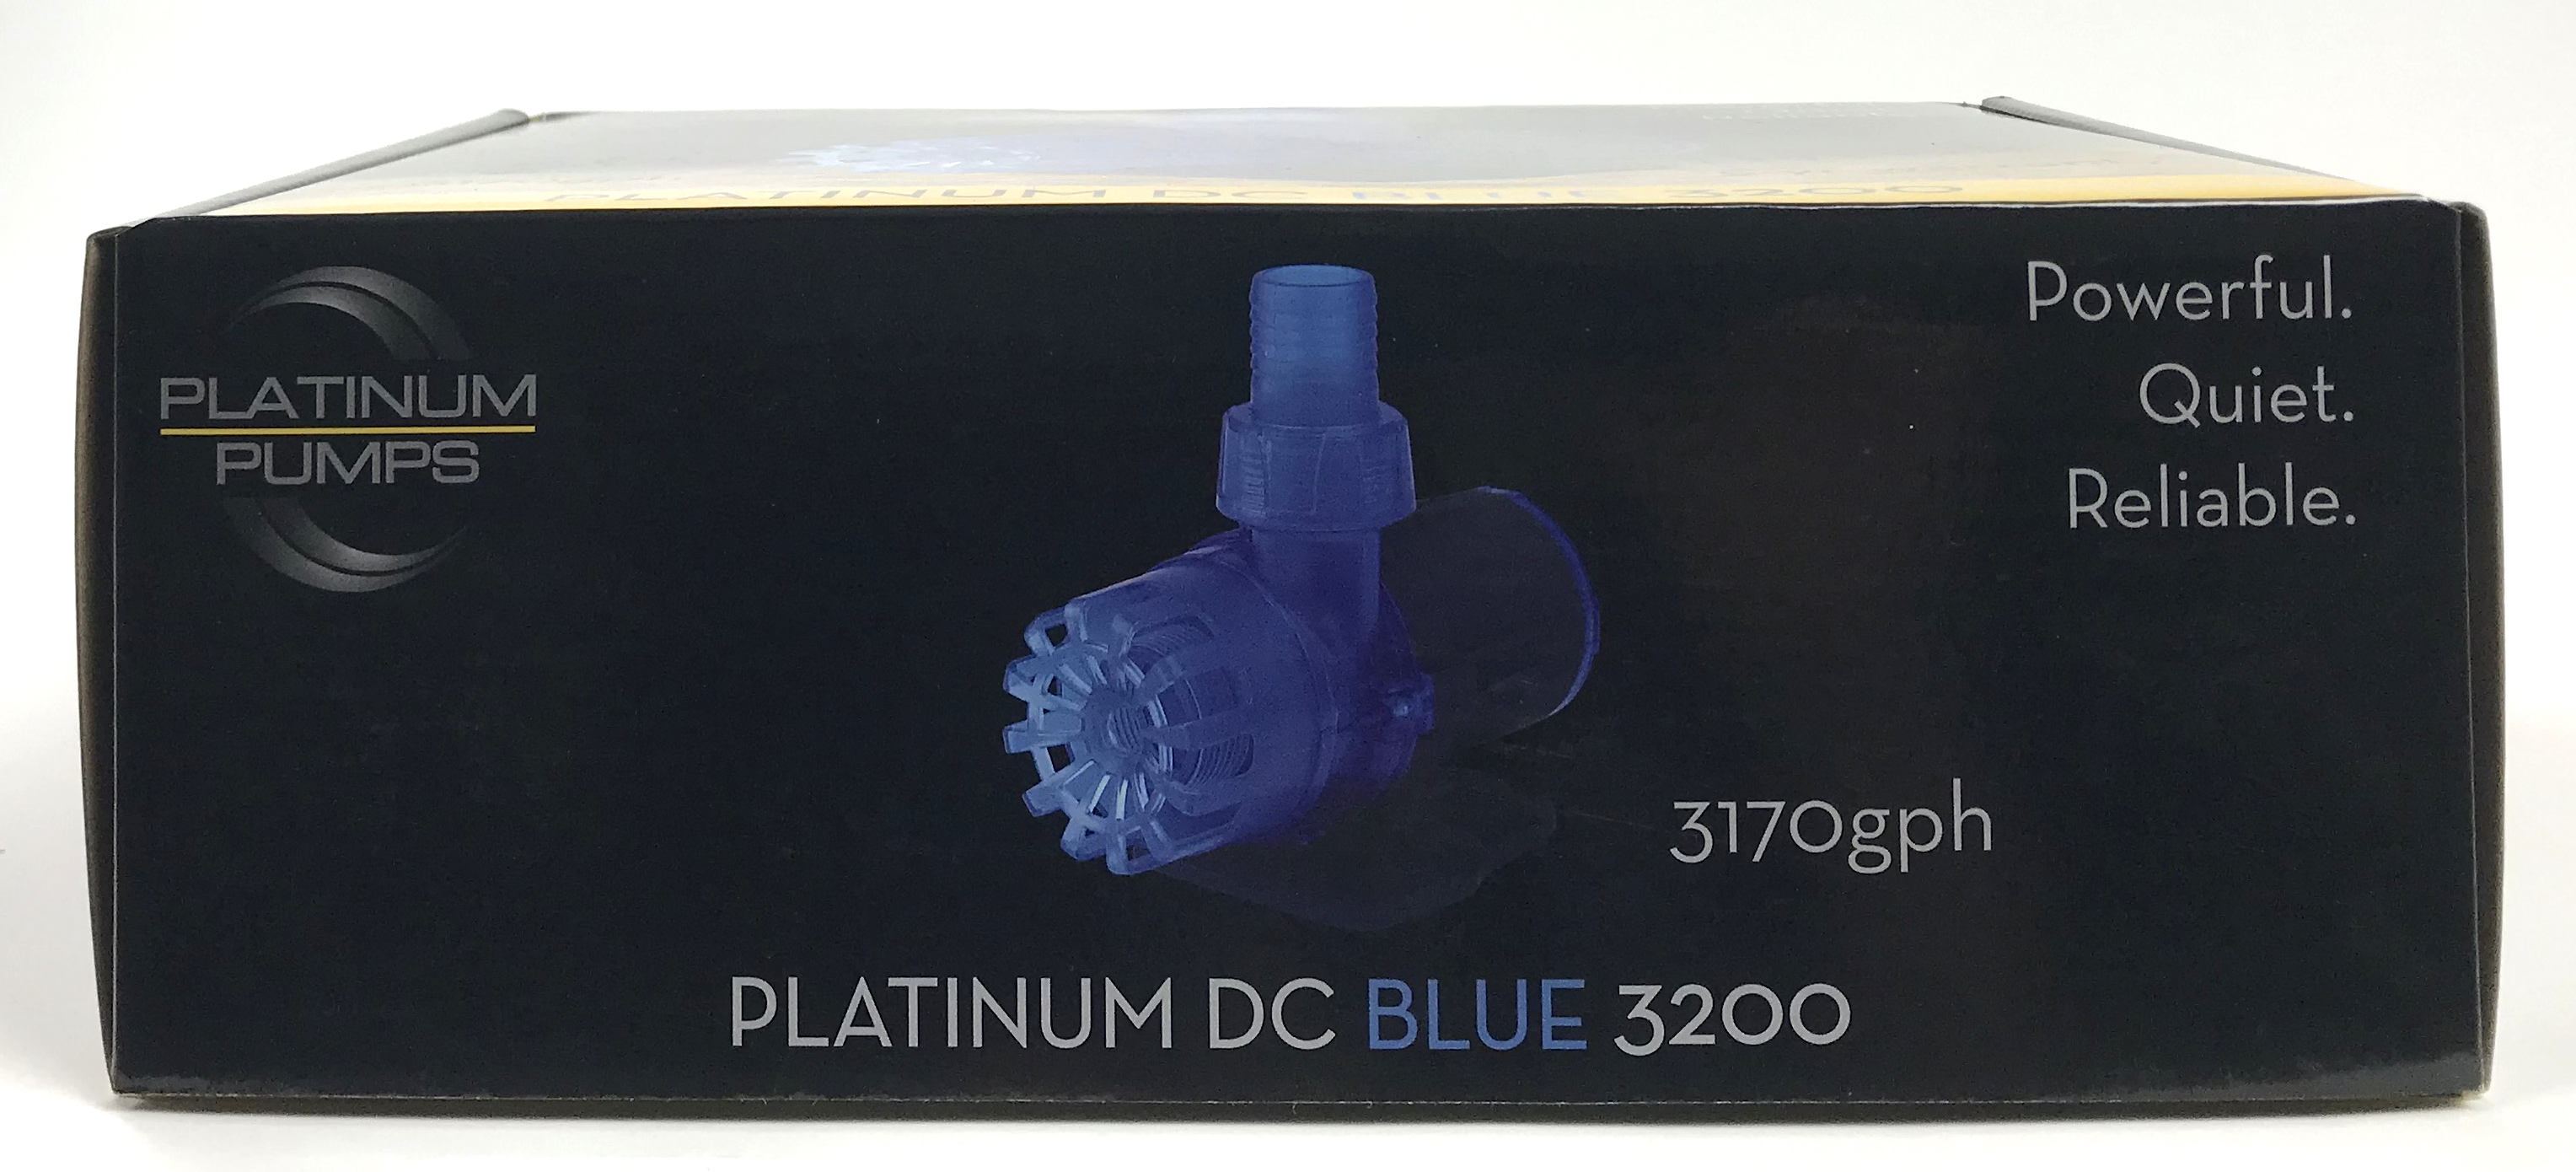 Platinum DC Blue 3200 Pump - 3170 gph